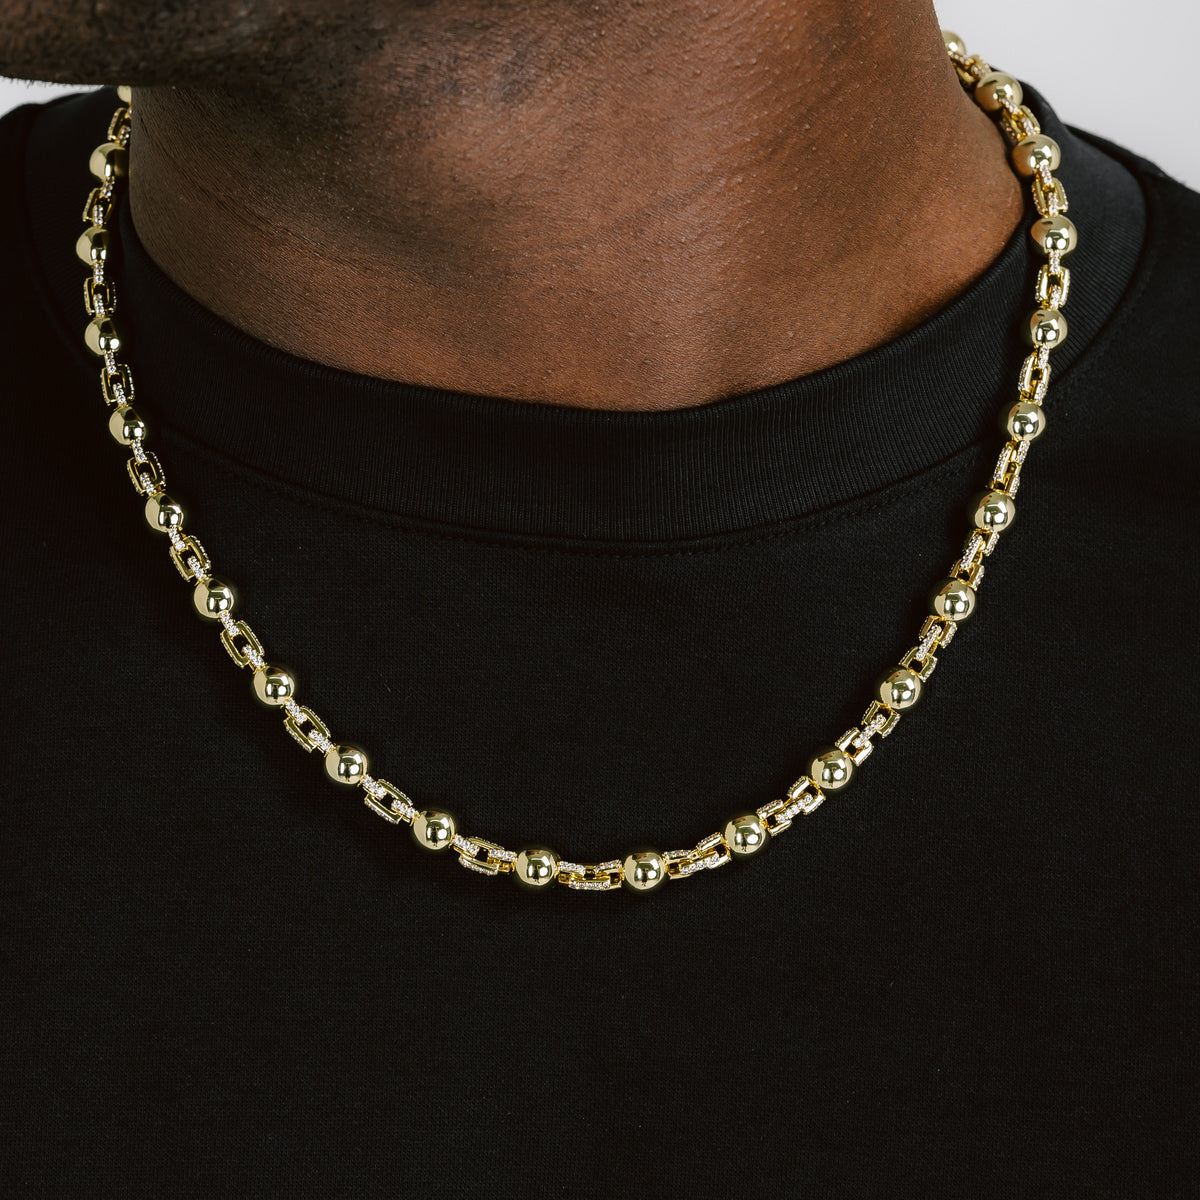 Cuffed Beads Chain 18k Gold